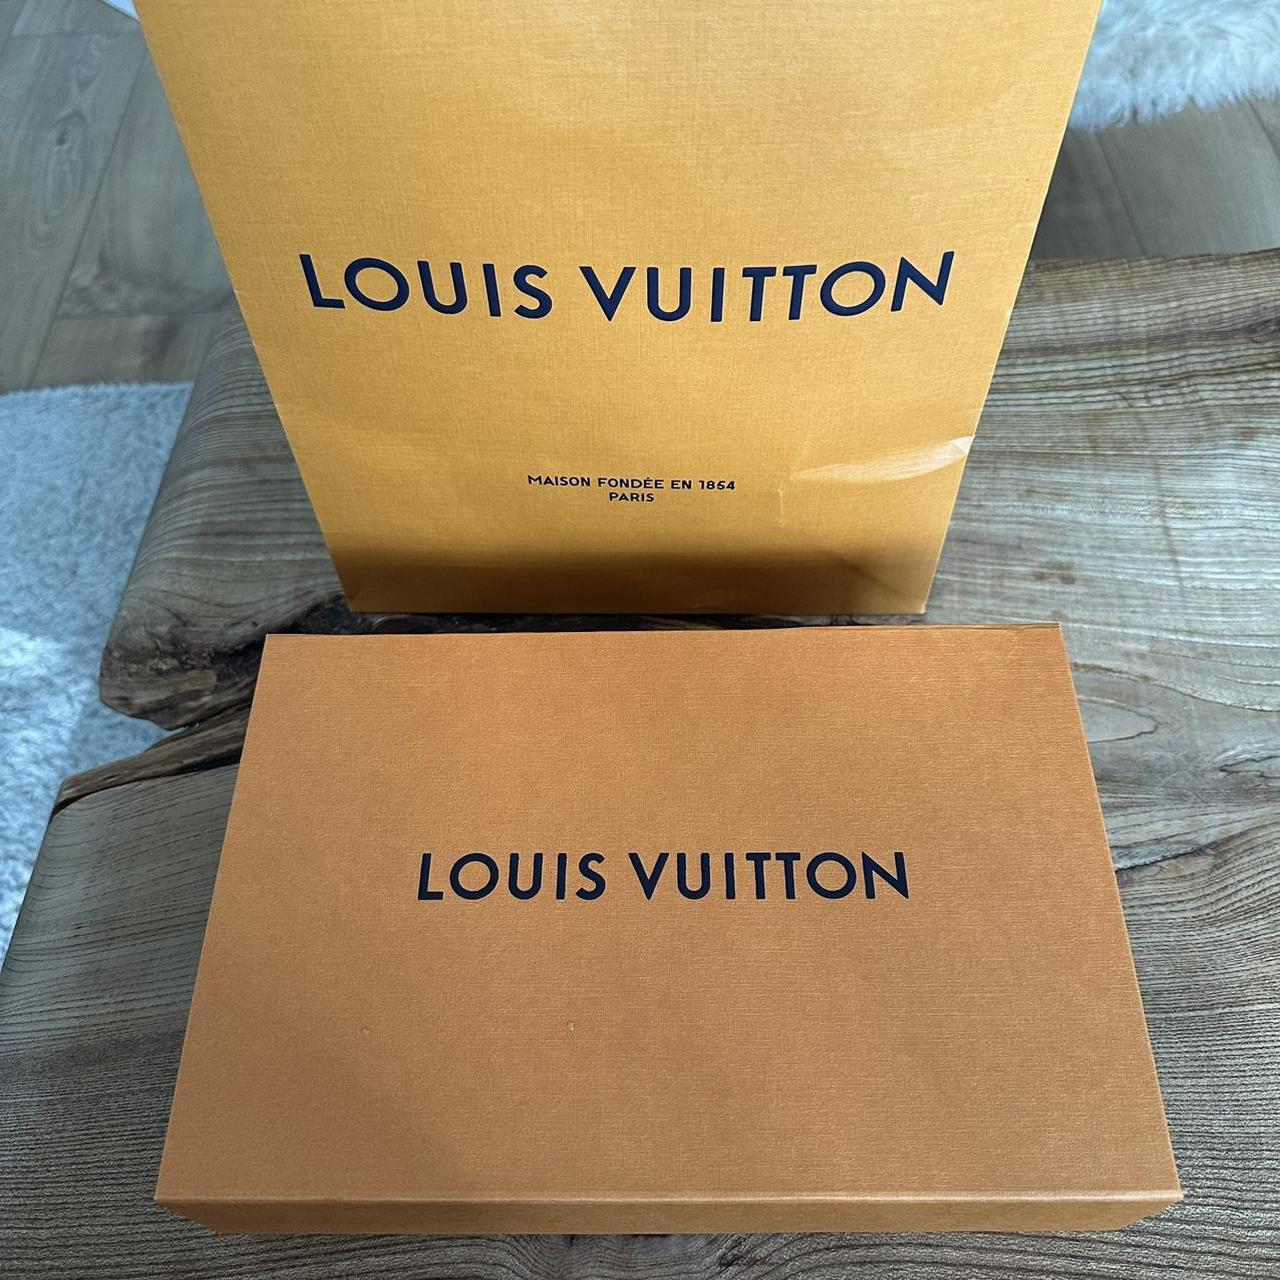 A real Louis Vuitton handbag with dust bag 😱😱😱 bag - Depop